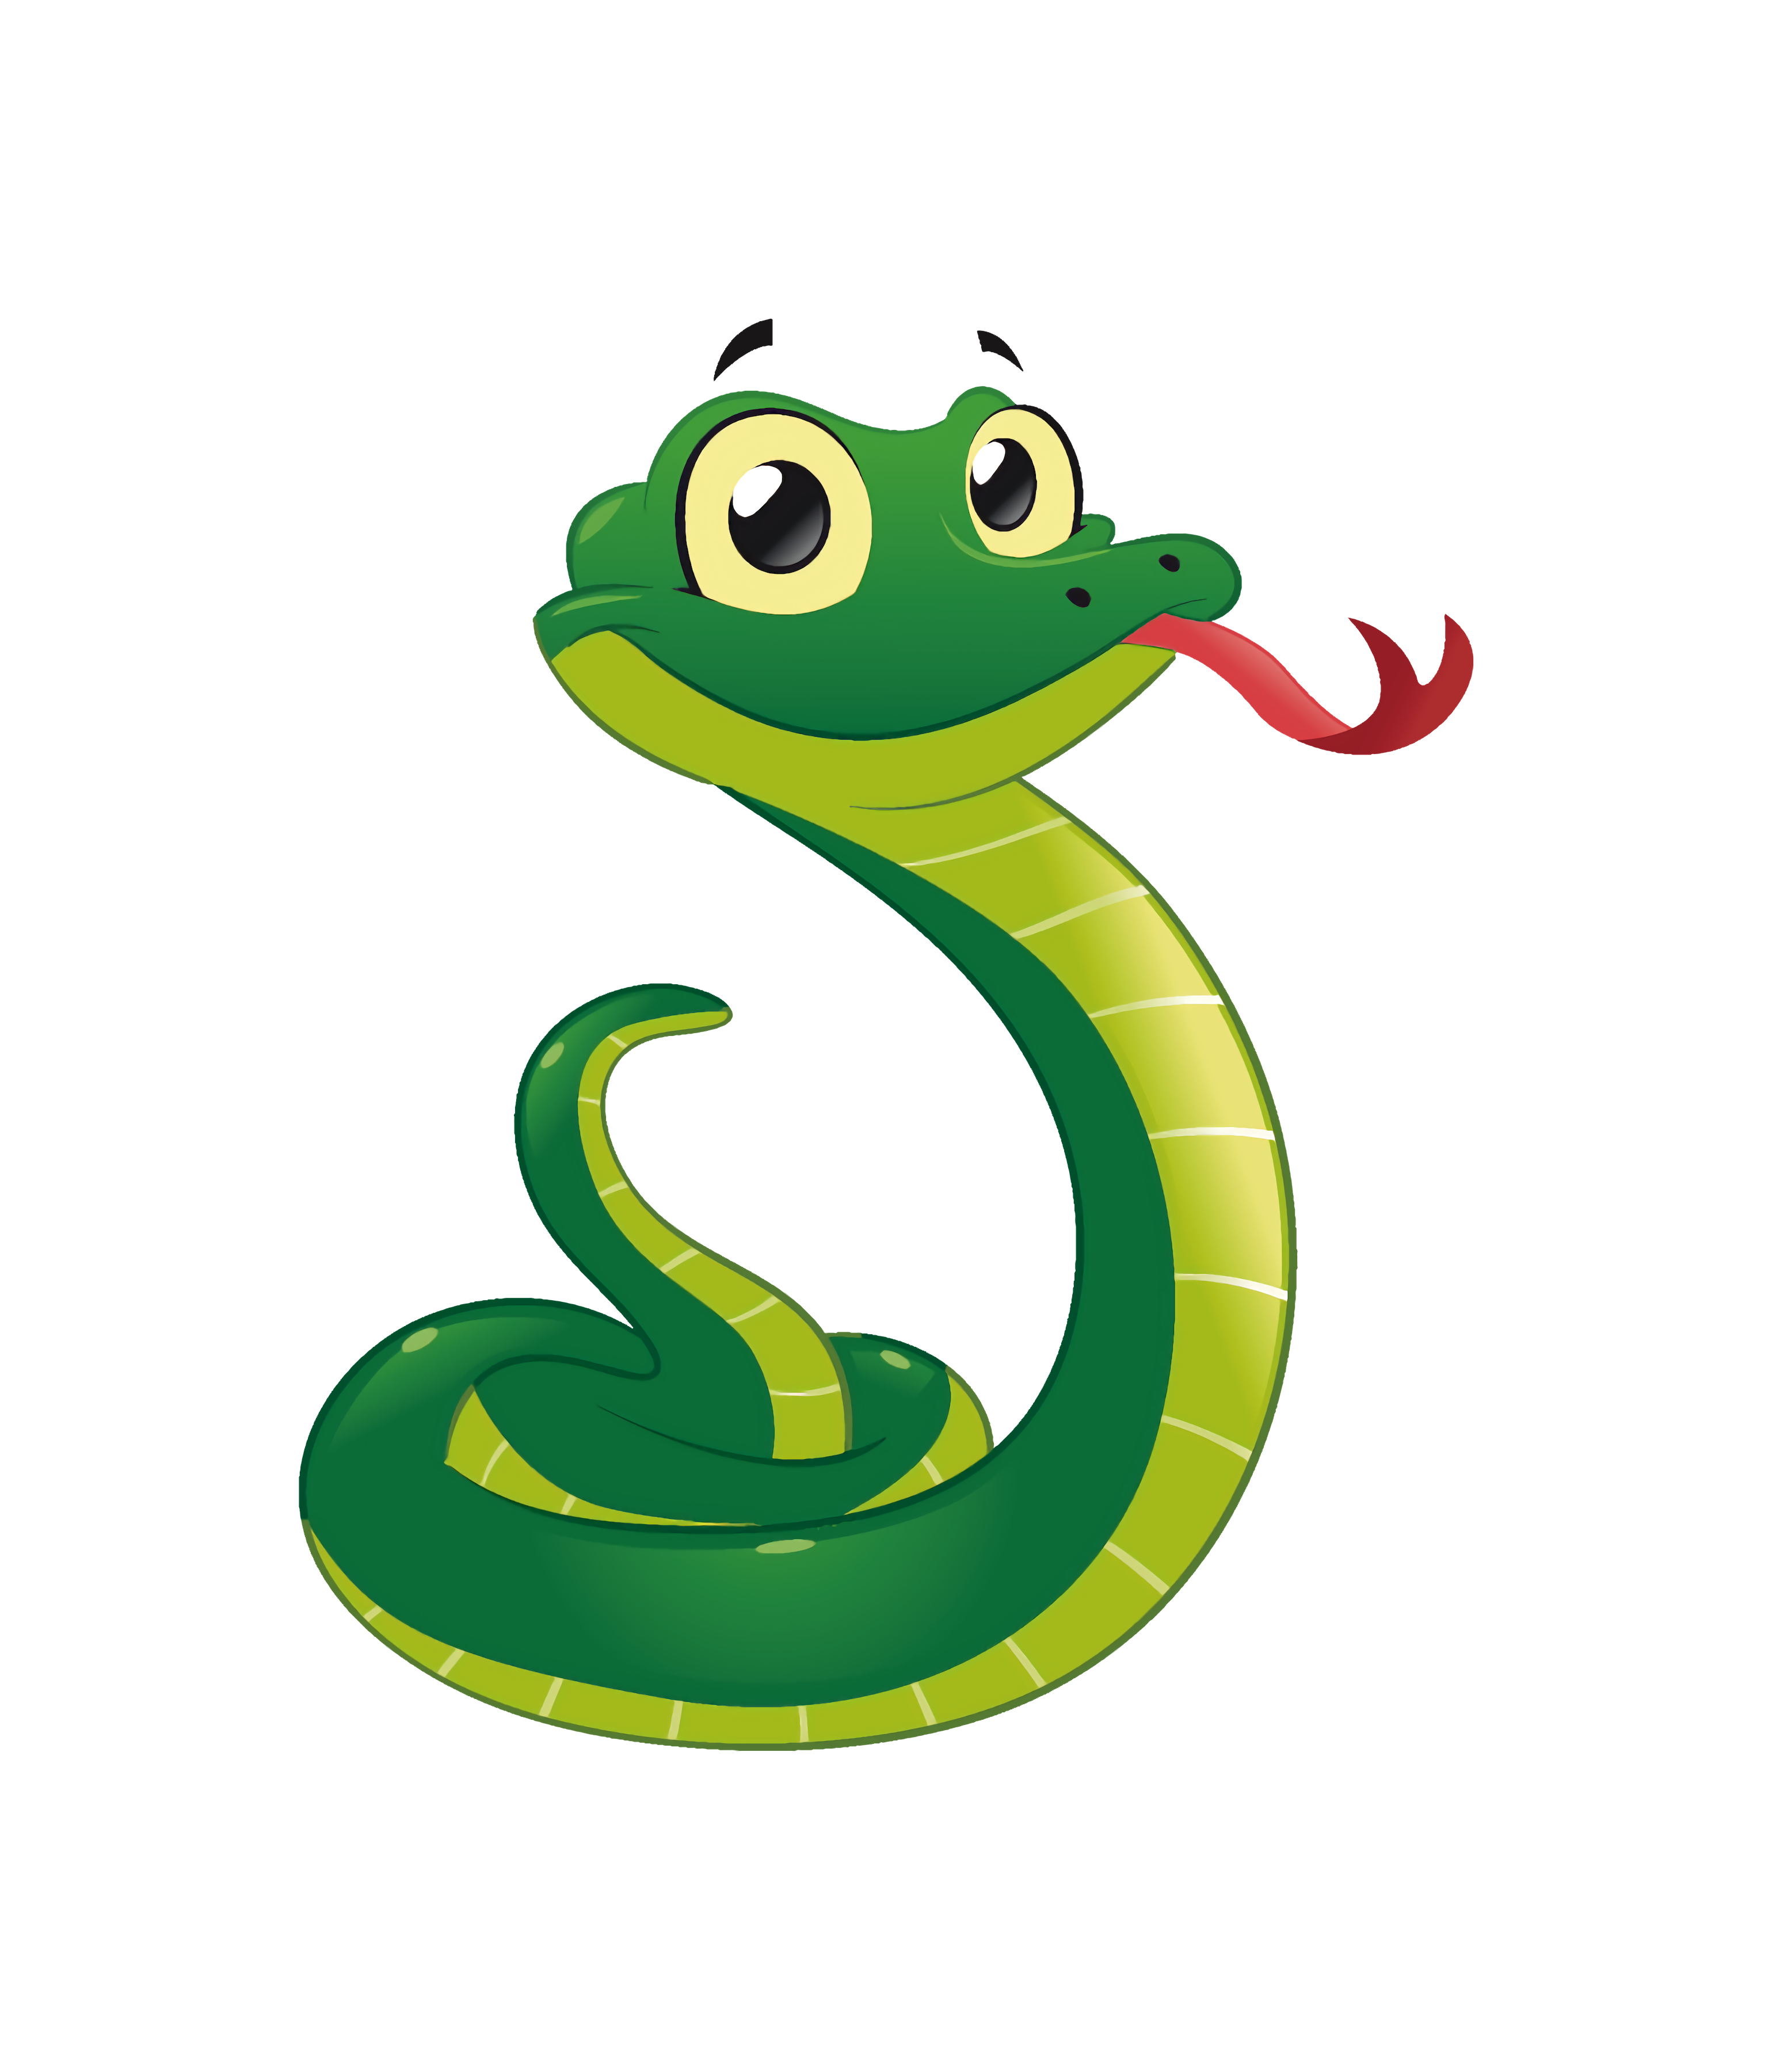 Snake Games - Play Free Online Snake Games on Friv 2